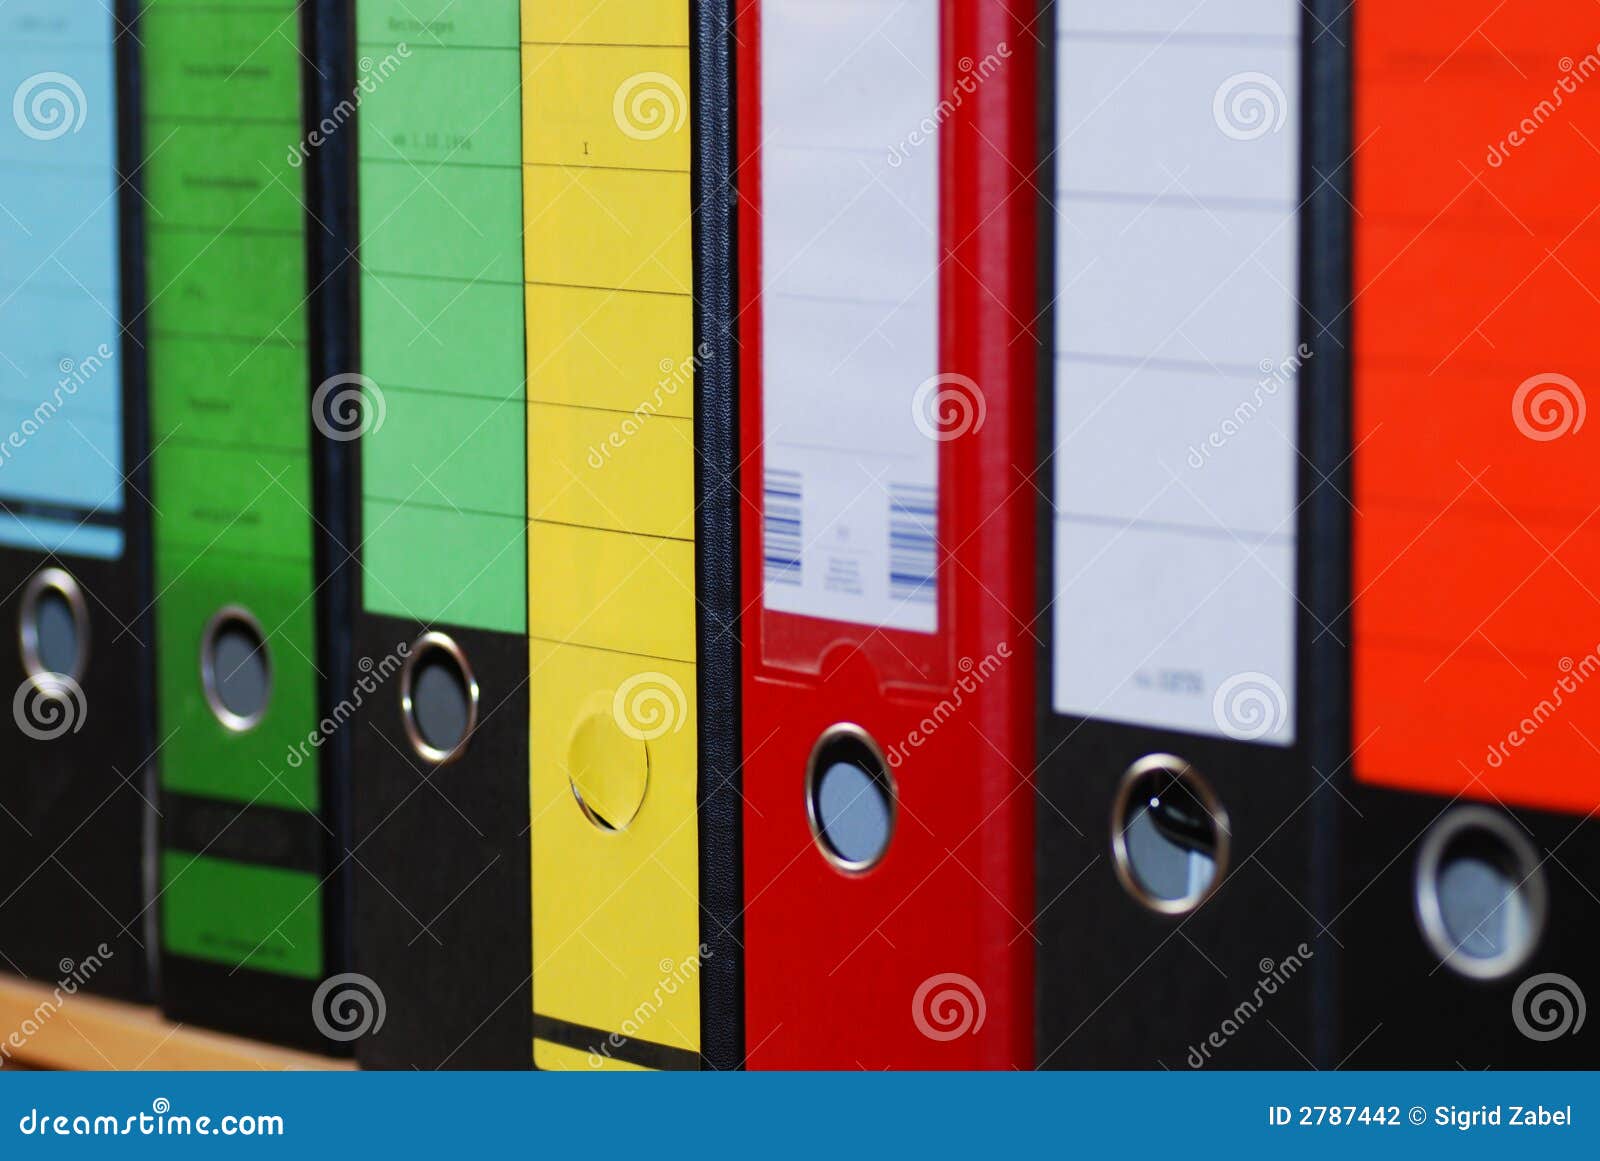 colorful magazine file boxes